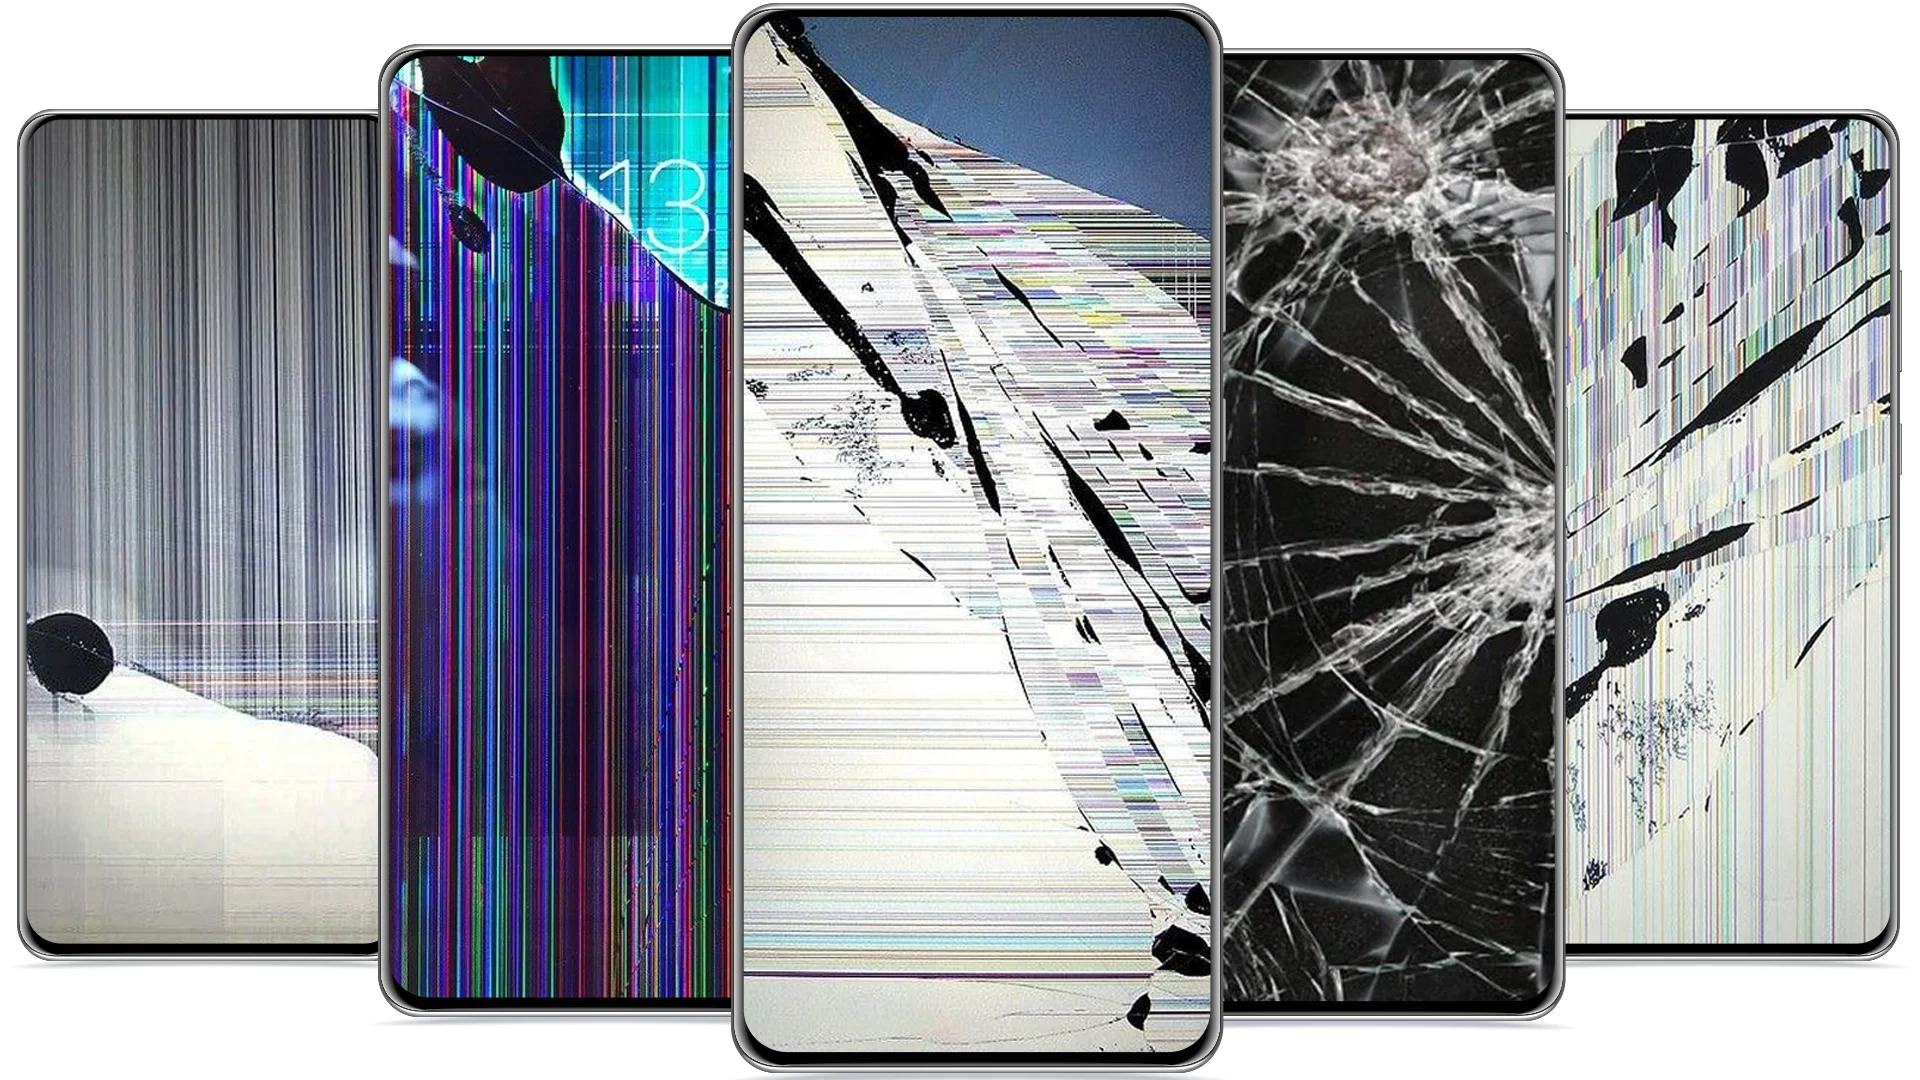 Broken screen wallpaper for Android  Free App Download